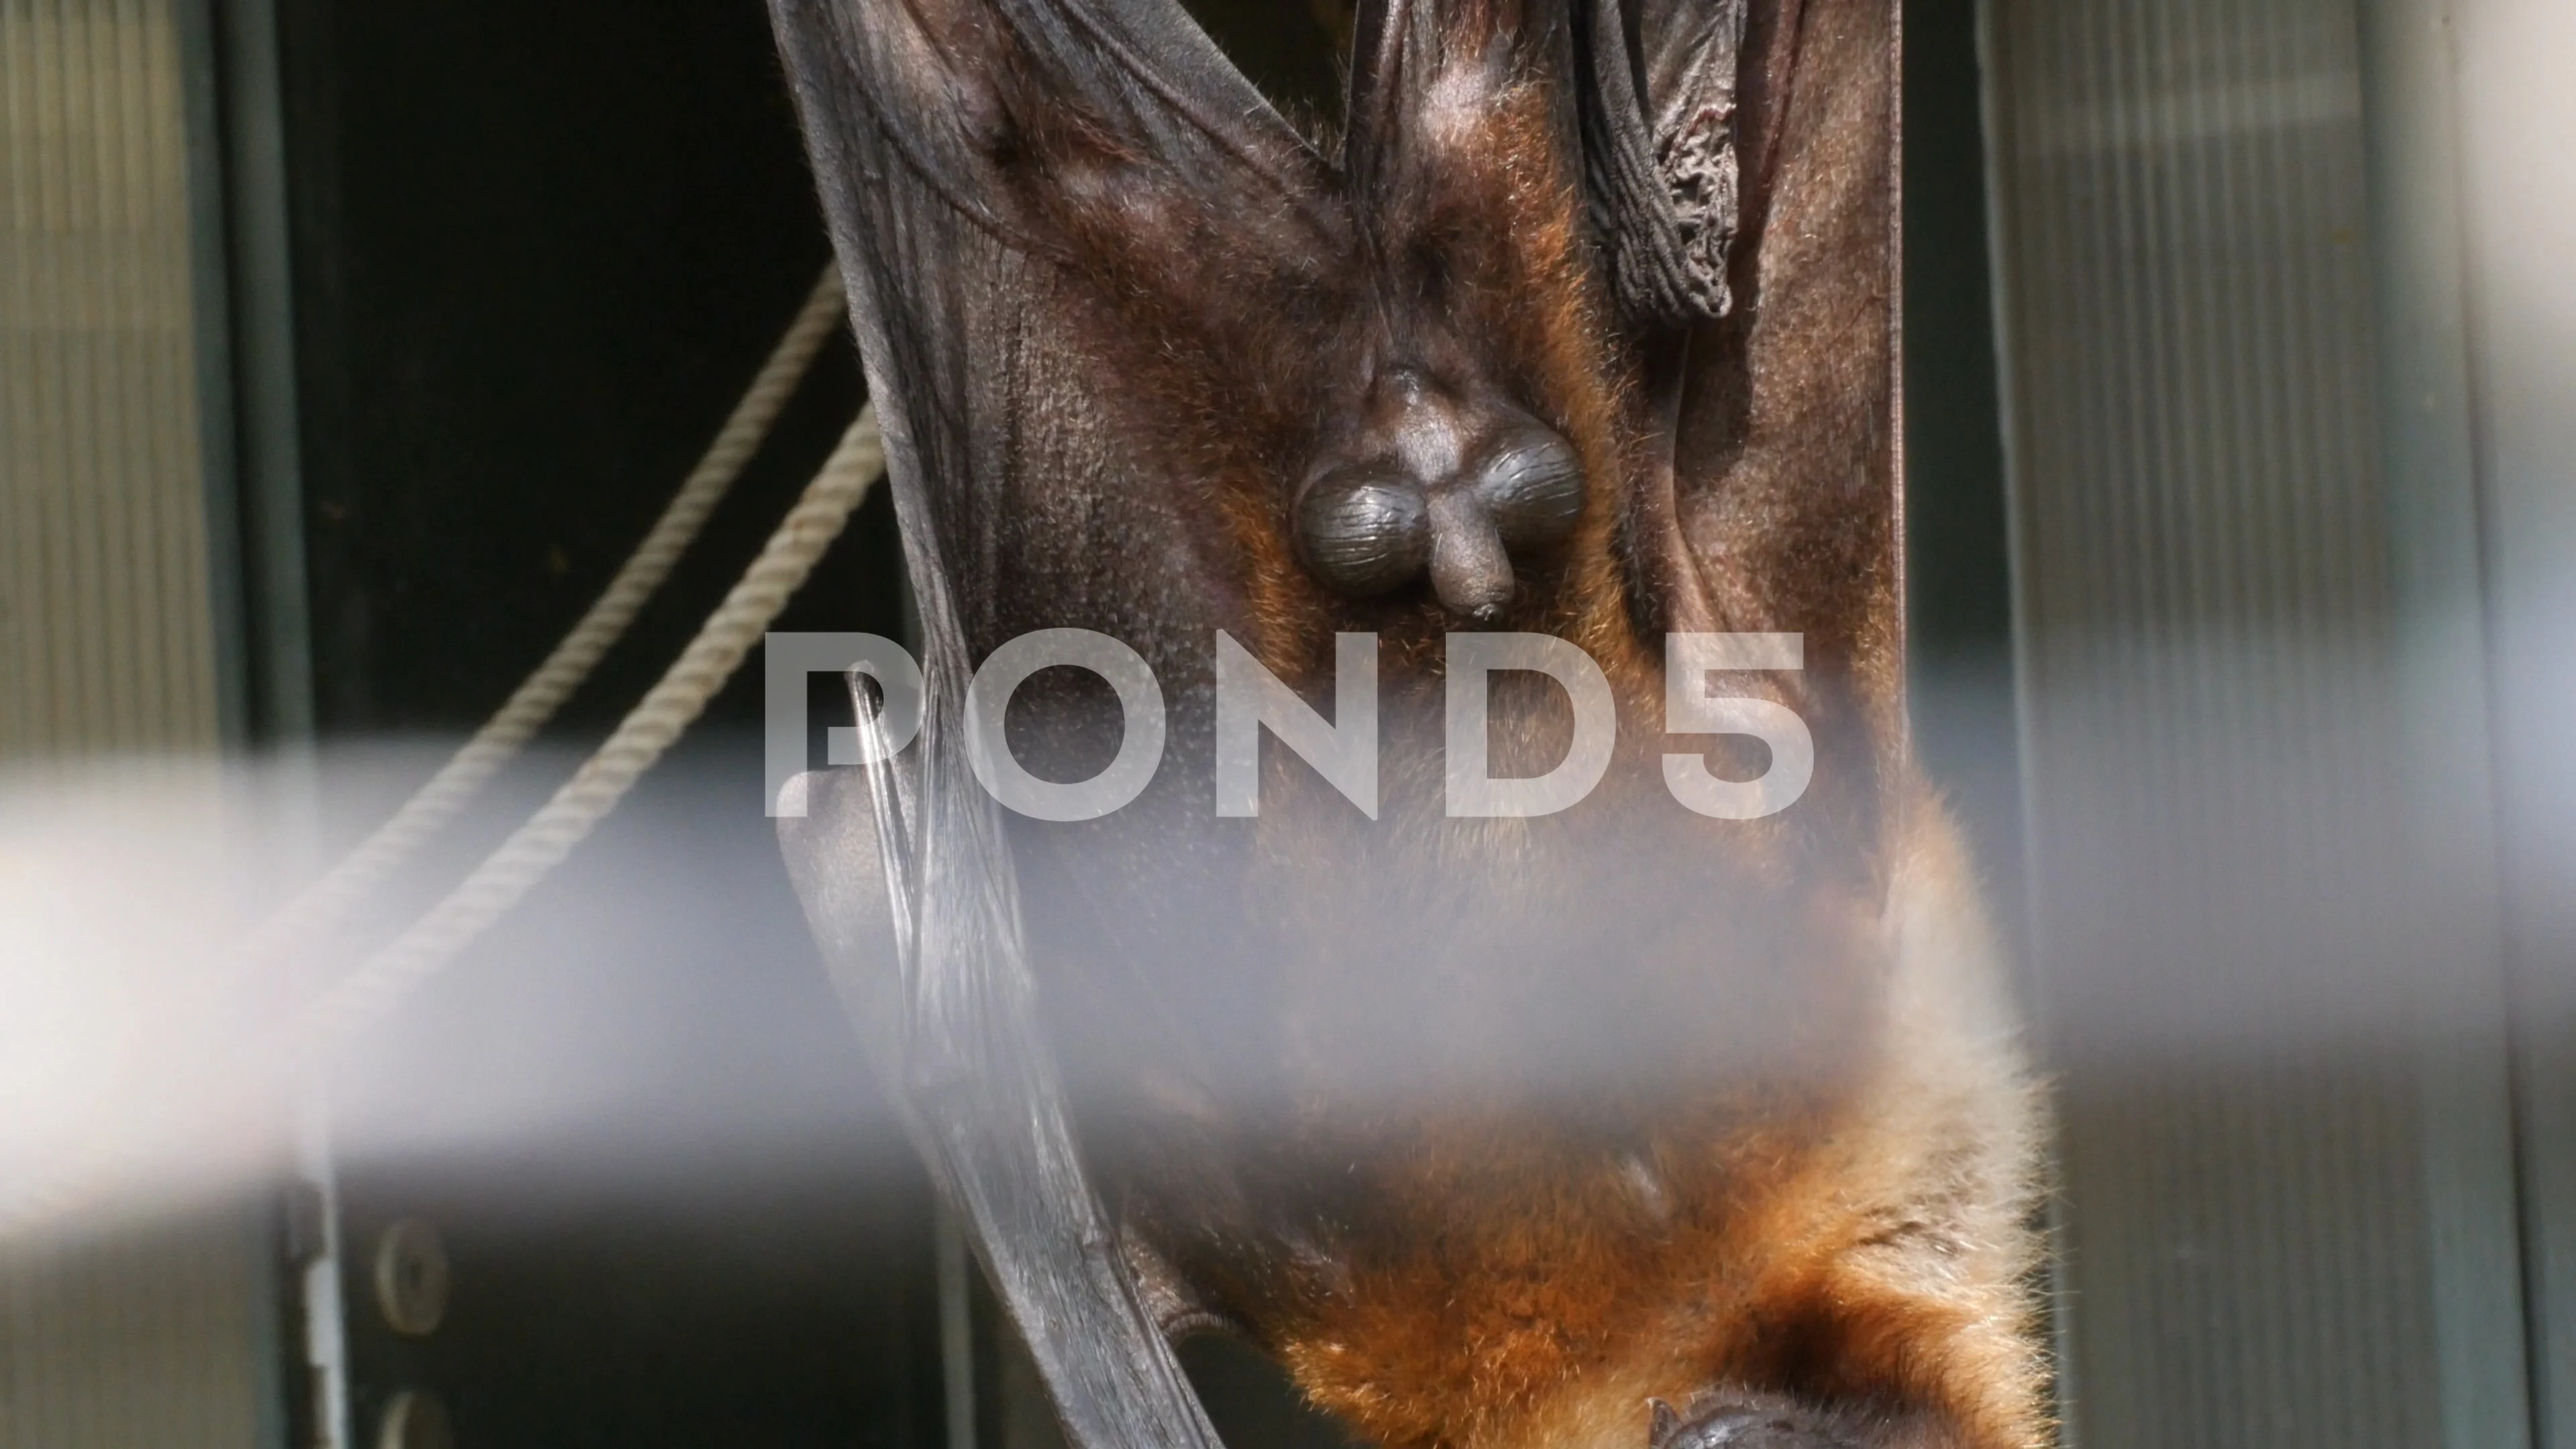 male fruit bat